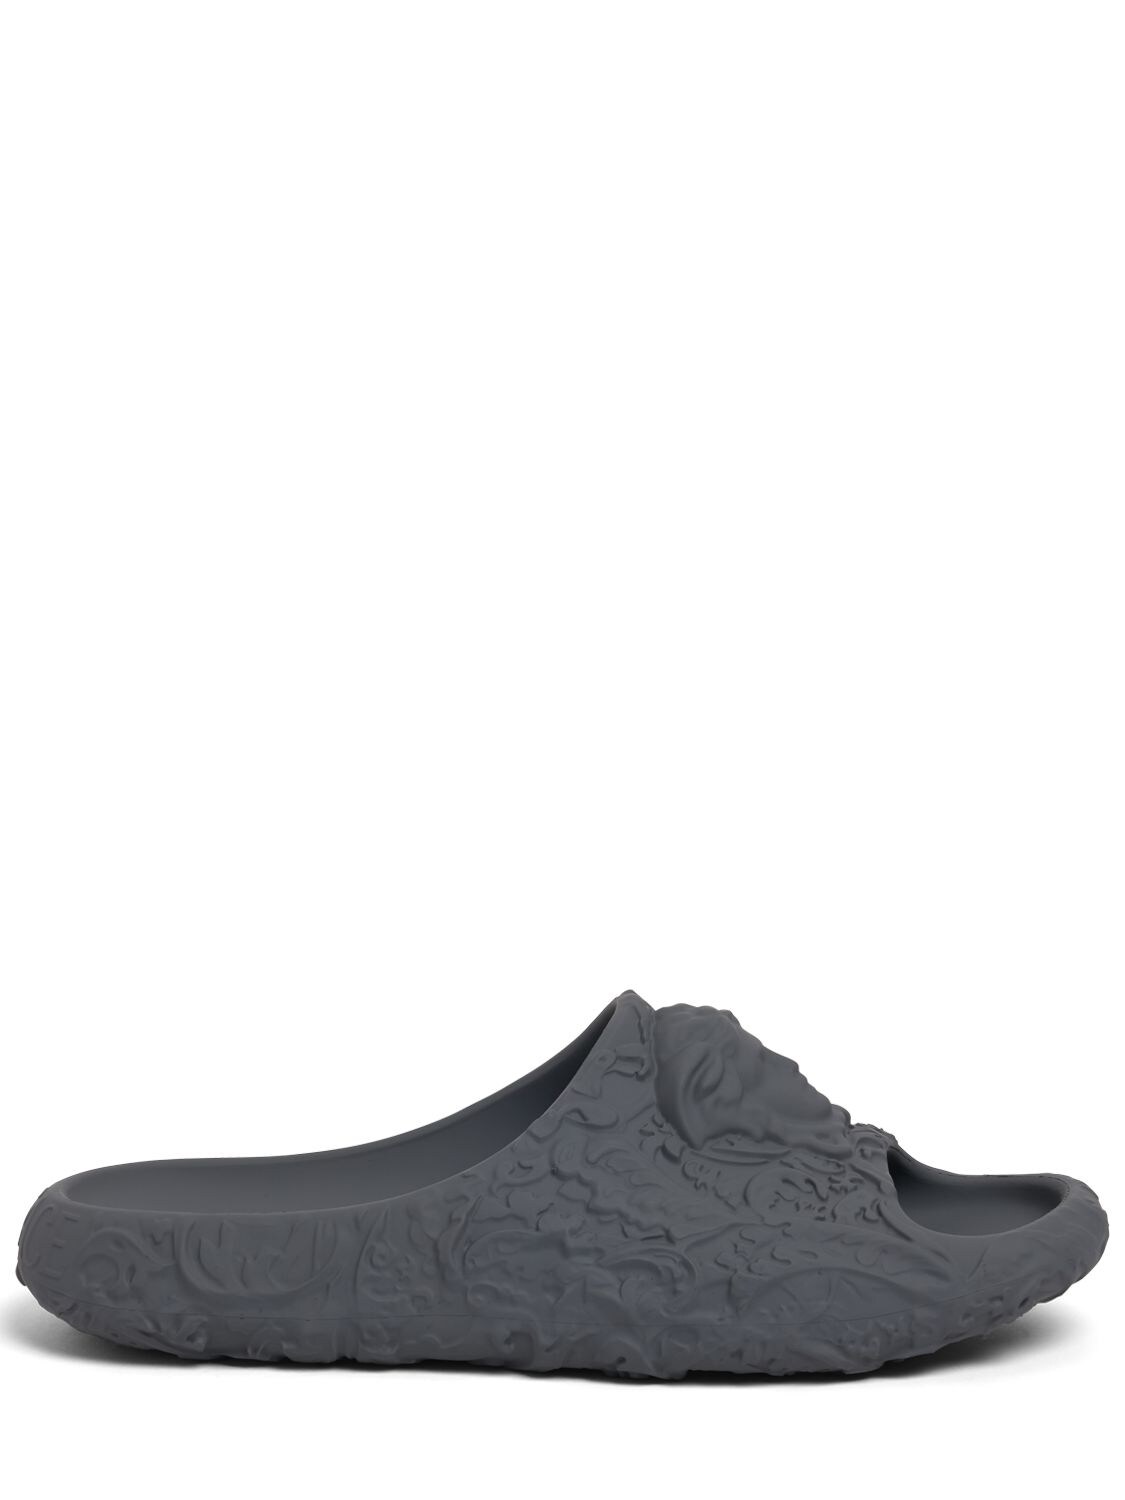 Versace Medusa Rubber Slide Sandals In Grey